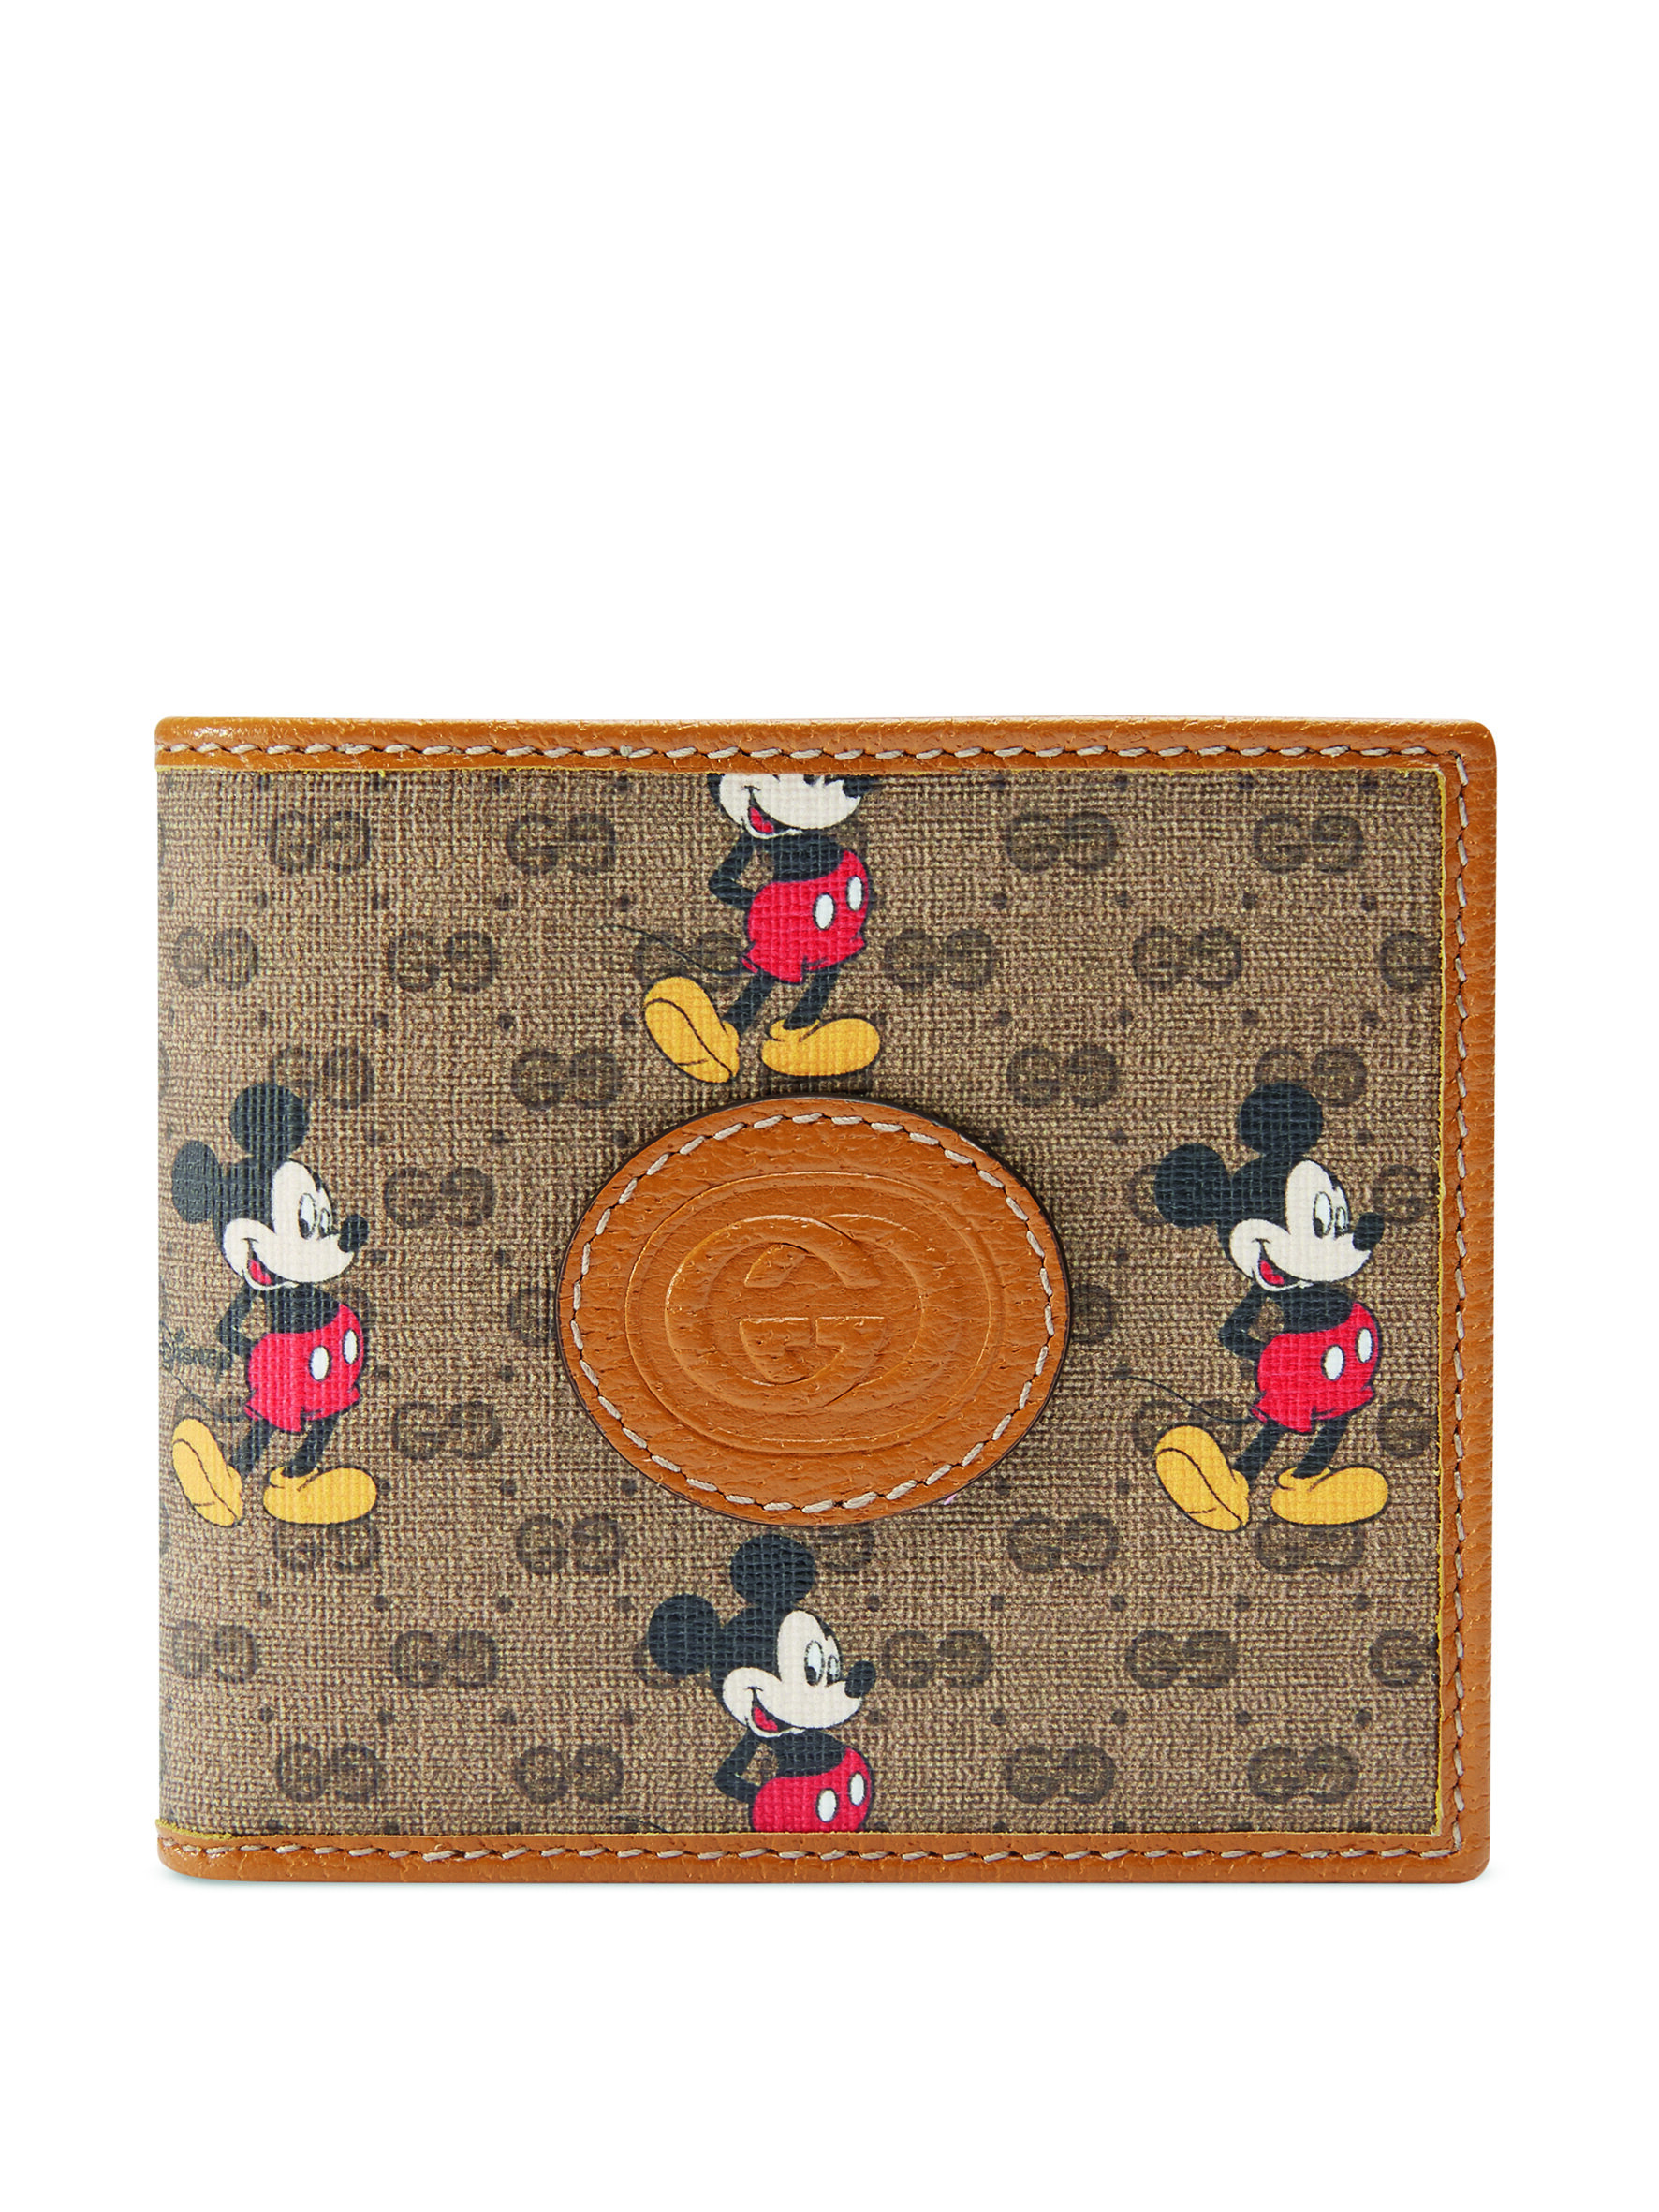 DisneyXGucci Basic Wallet - Php 32,500.jpg